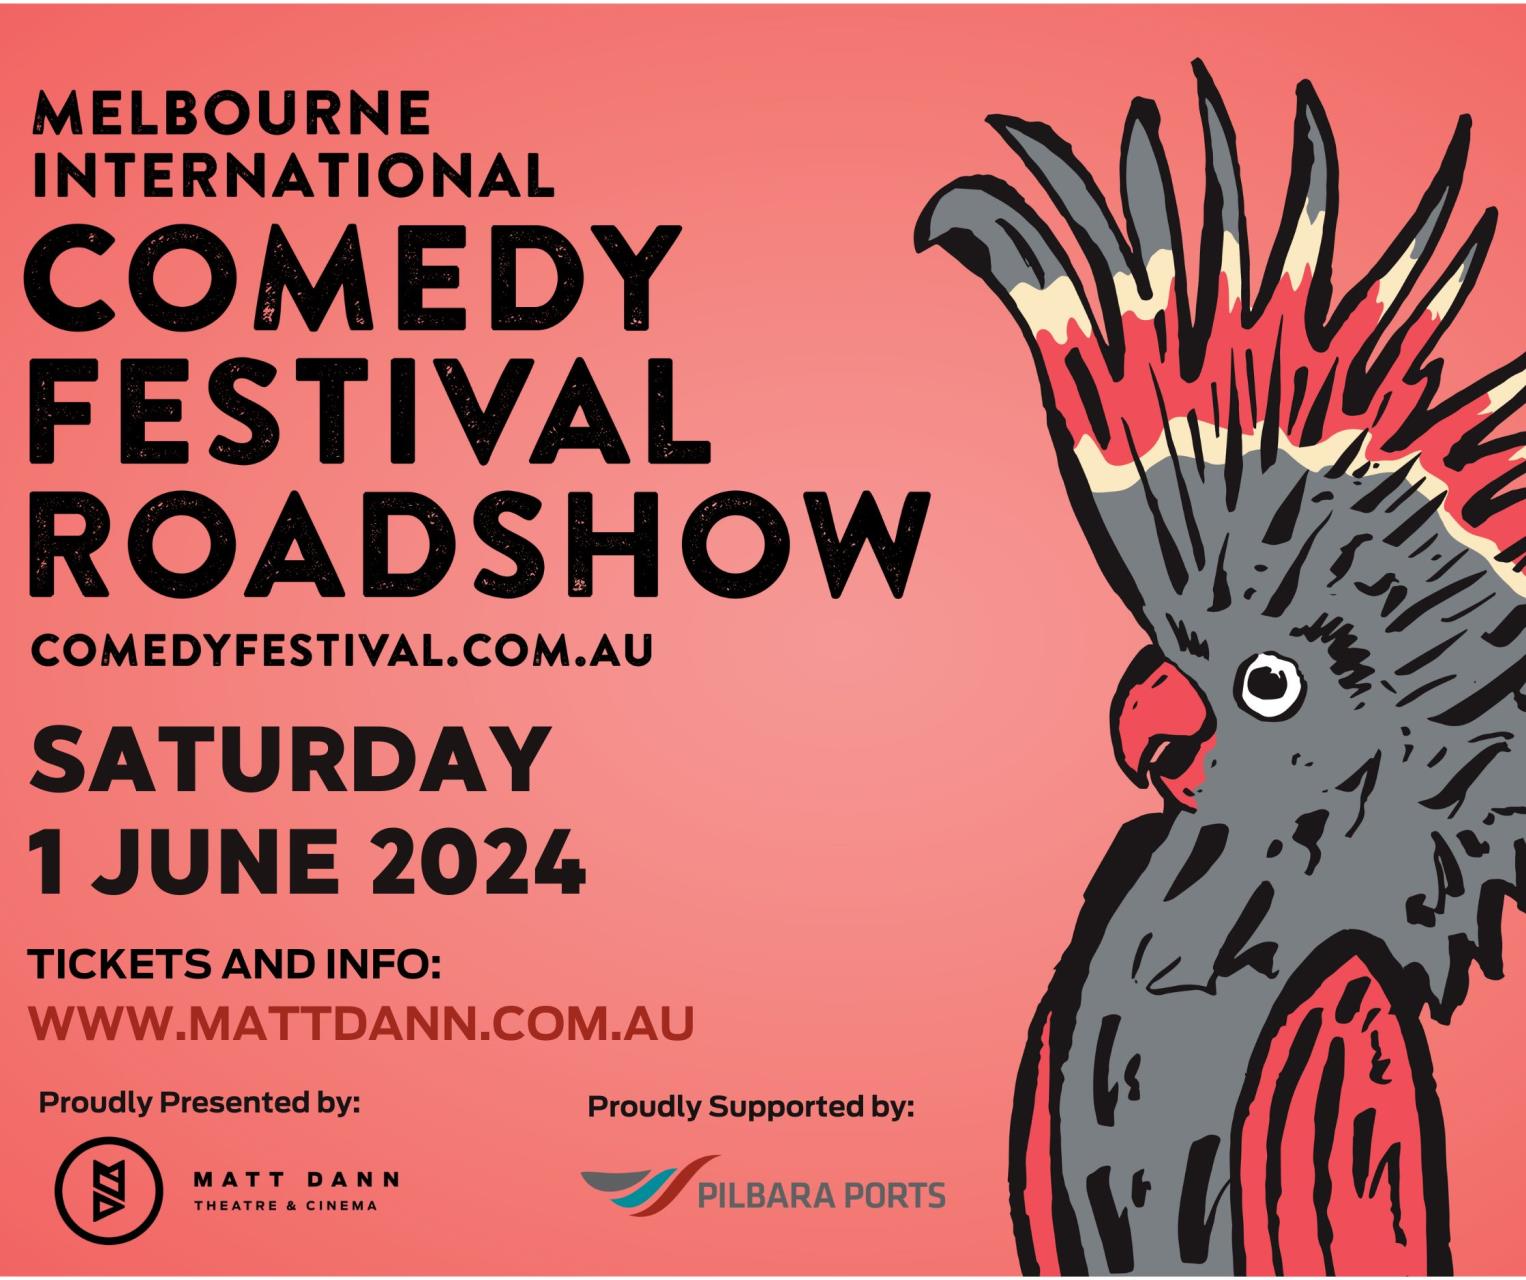 Melbourne Internation Comedy Festival Roadshow